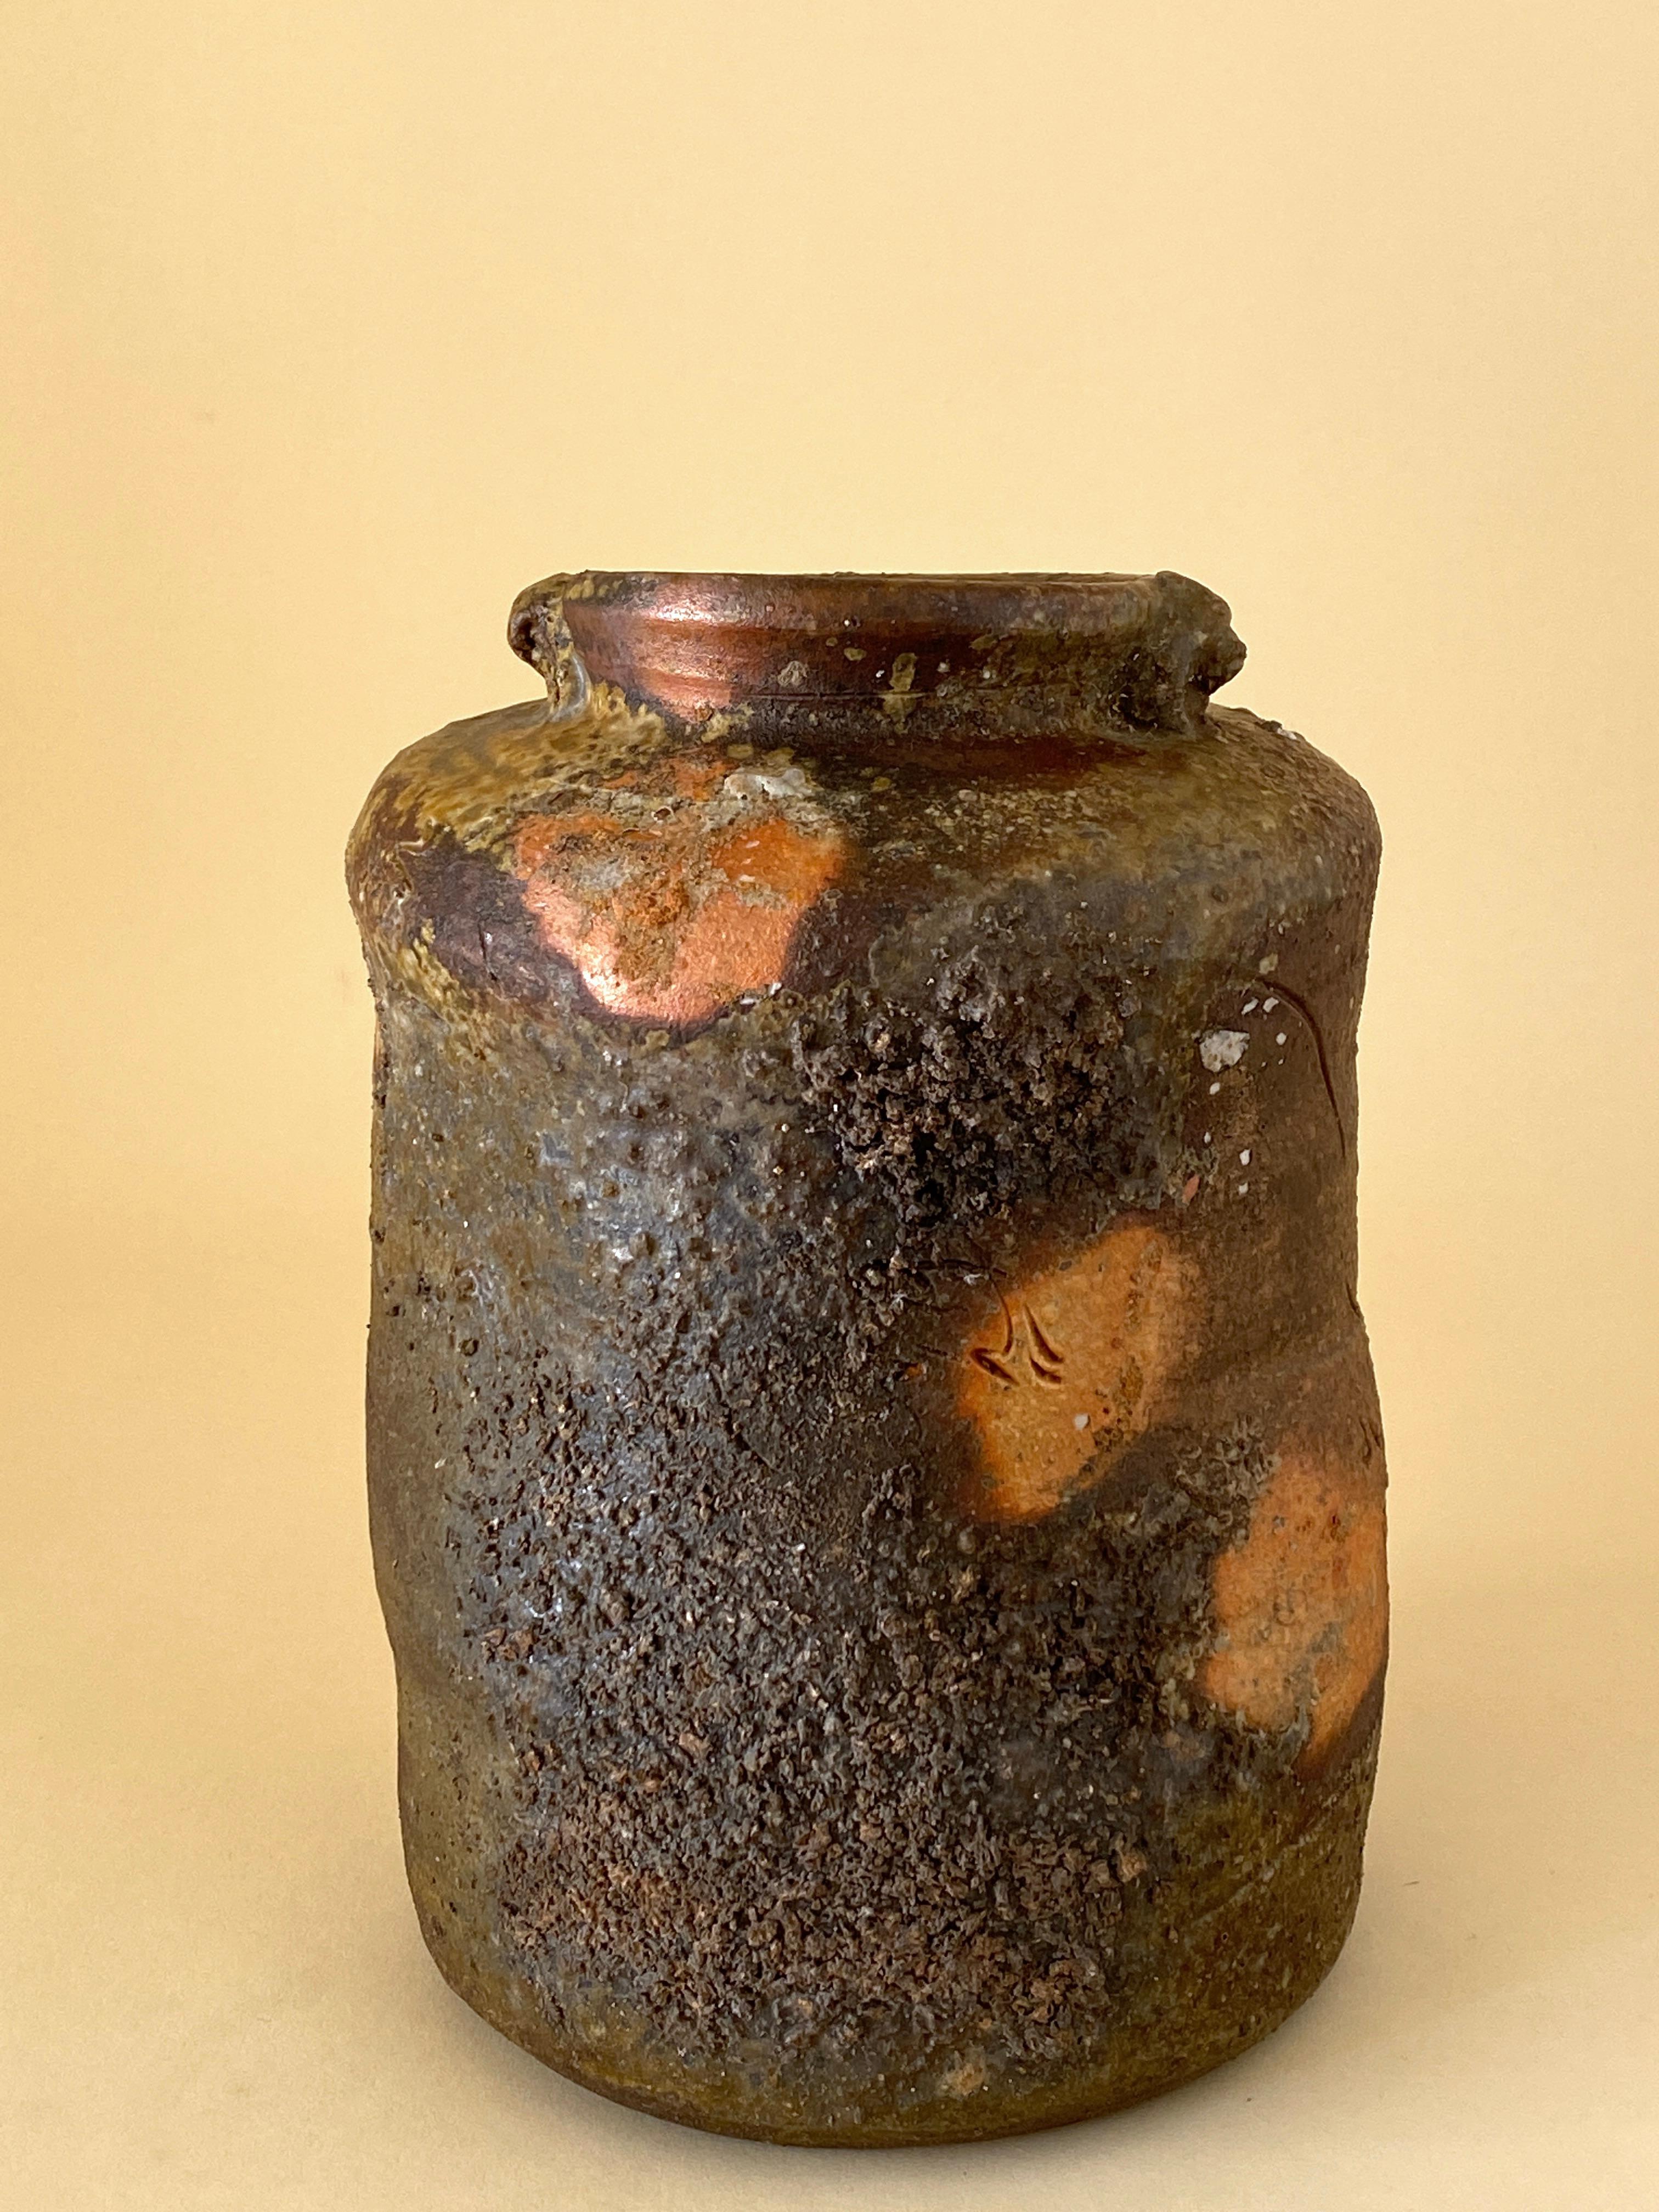 Shigaraki Style Wood Fired Ceramic Vase or Jar Japan Wabi Sabi Mingei Tradition In Good Condition For Sale In Santa Fe, NM